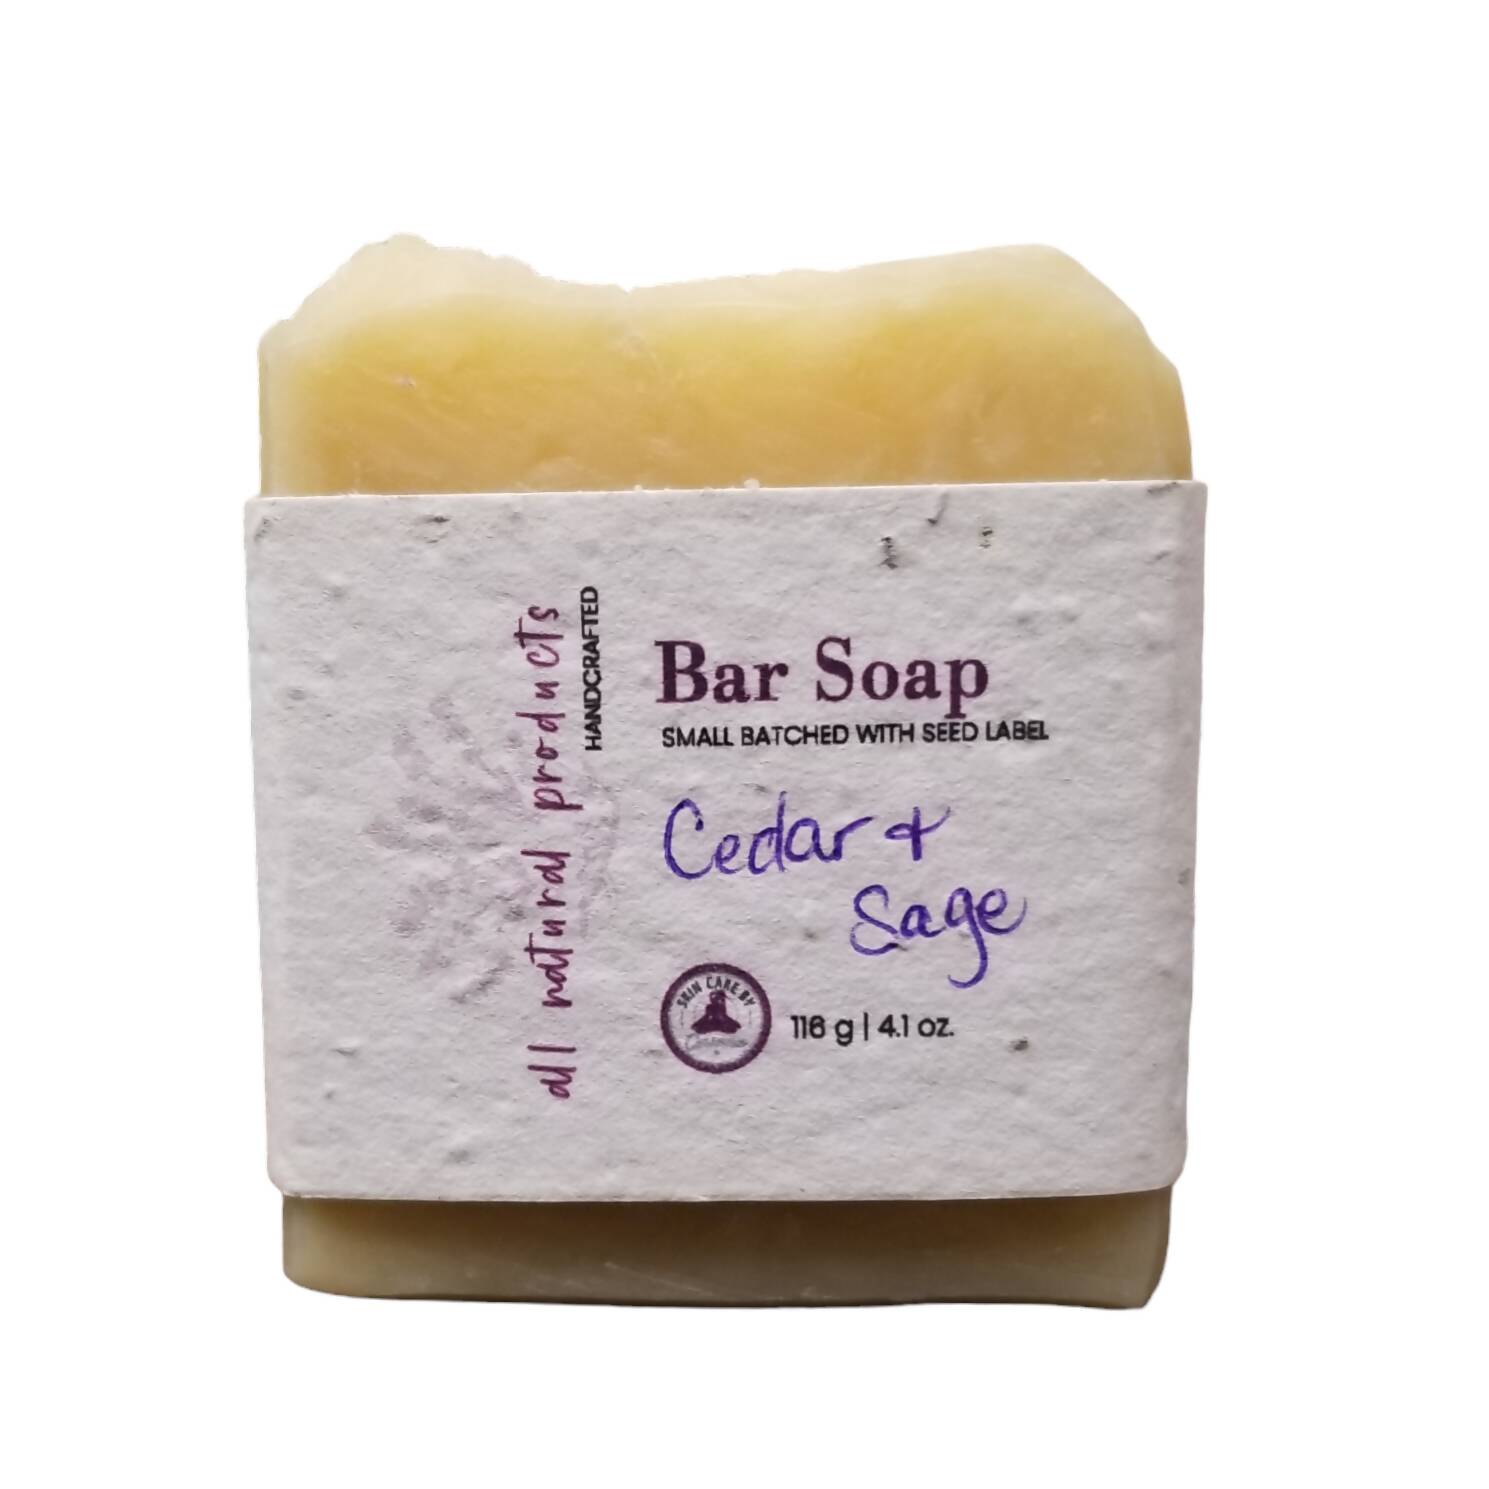 Cedar & Sage Bar Soap